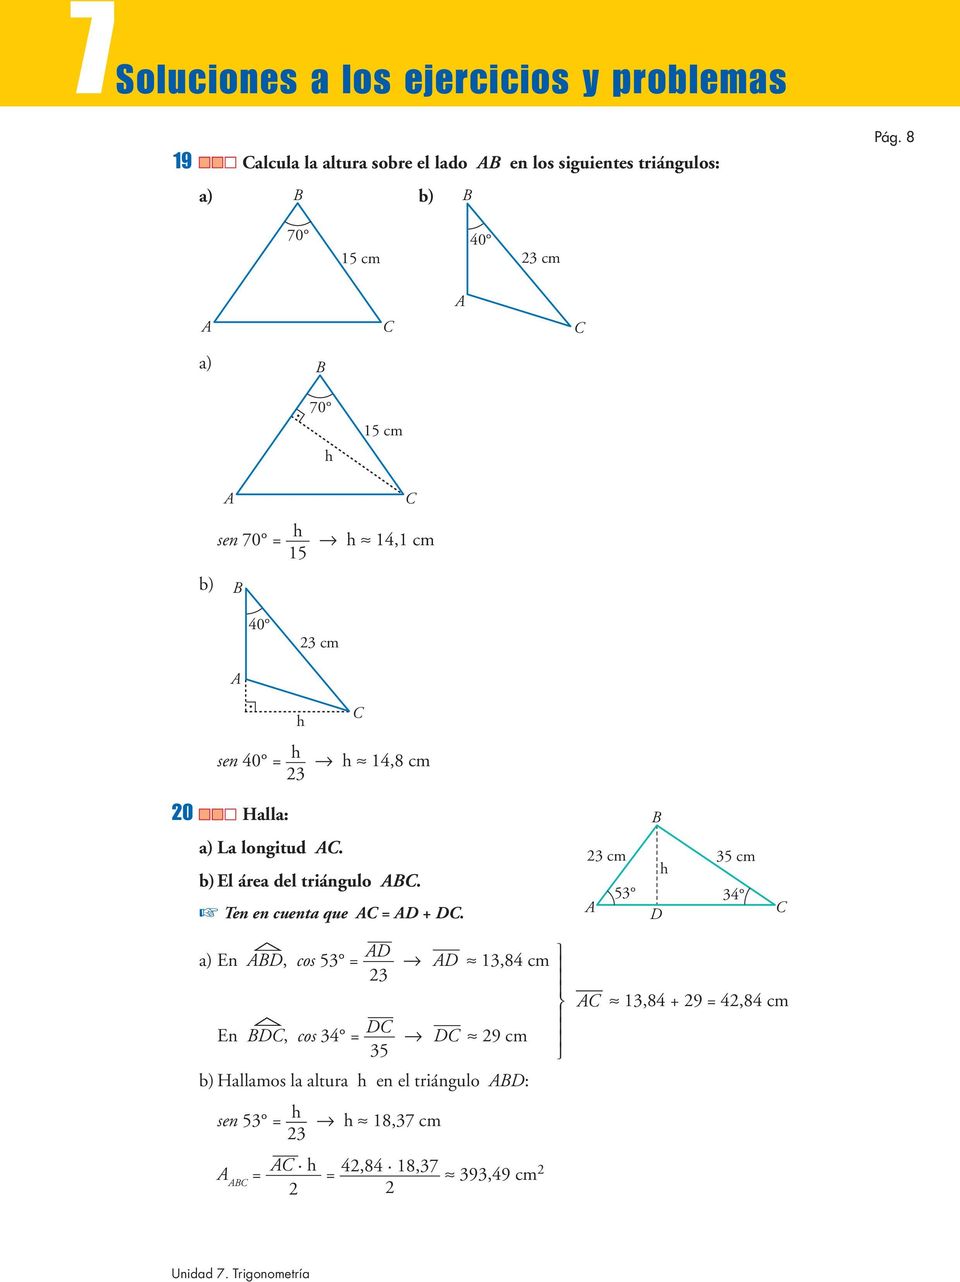 b)el áre del triángulo. Ten en cuent que D + D.